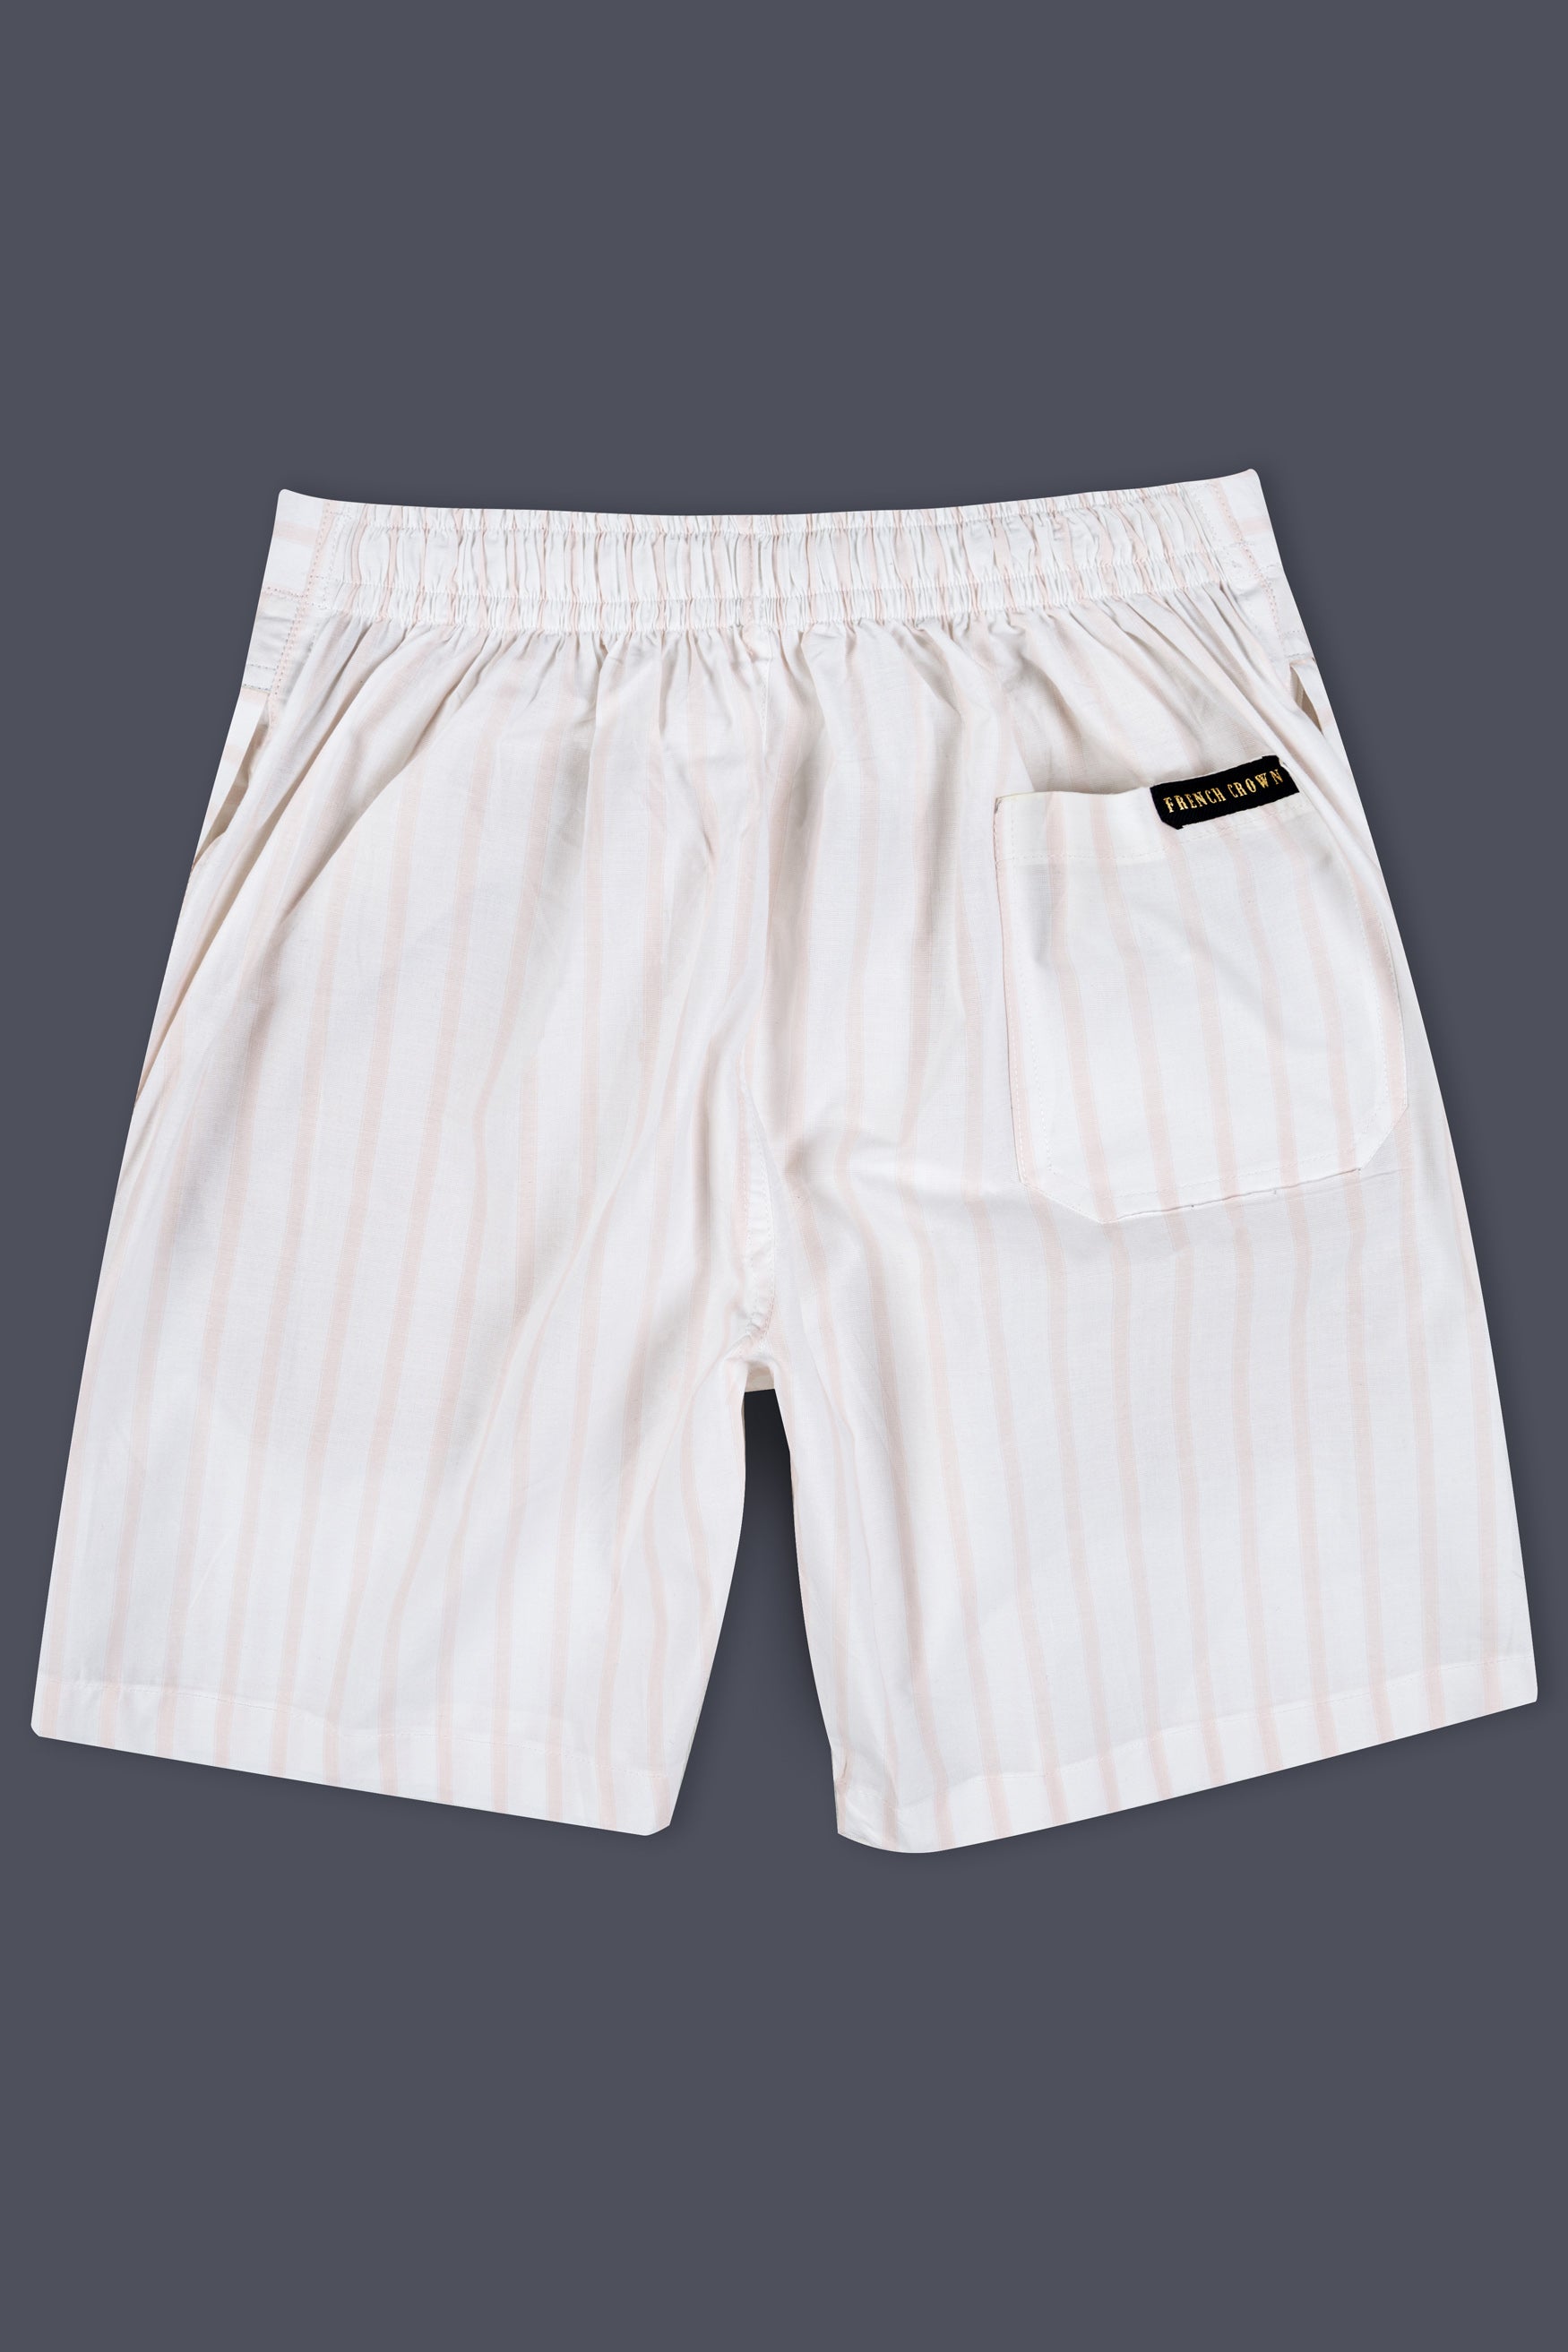 Bright White and Swirl Pink Striped Premium Cotton Shorts SR400-28, SR400-30, SR400-32, SR400-34, SR400-36, SR400-38, SR400-40, SR400-42, SR400-44